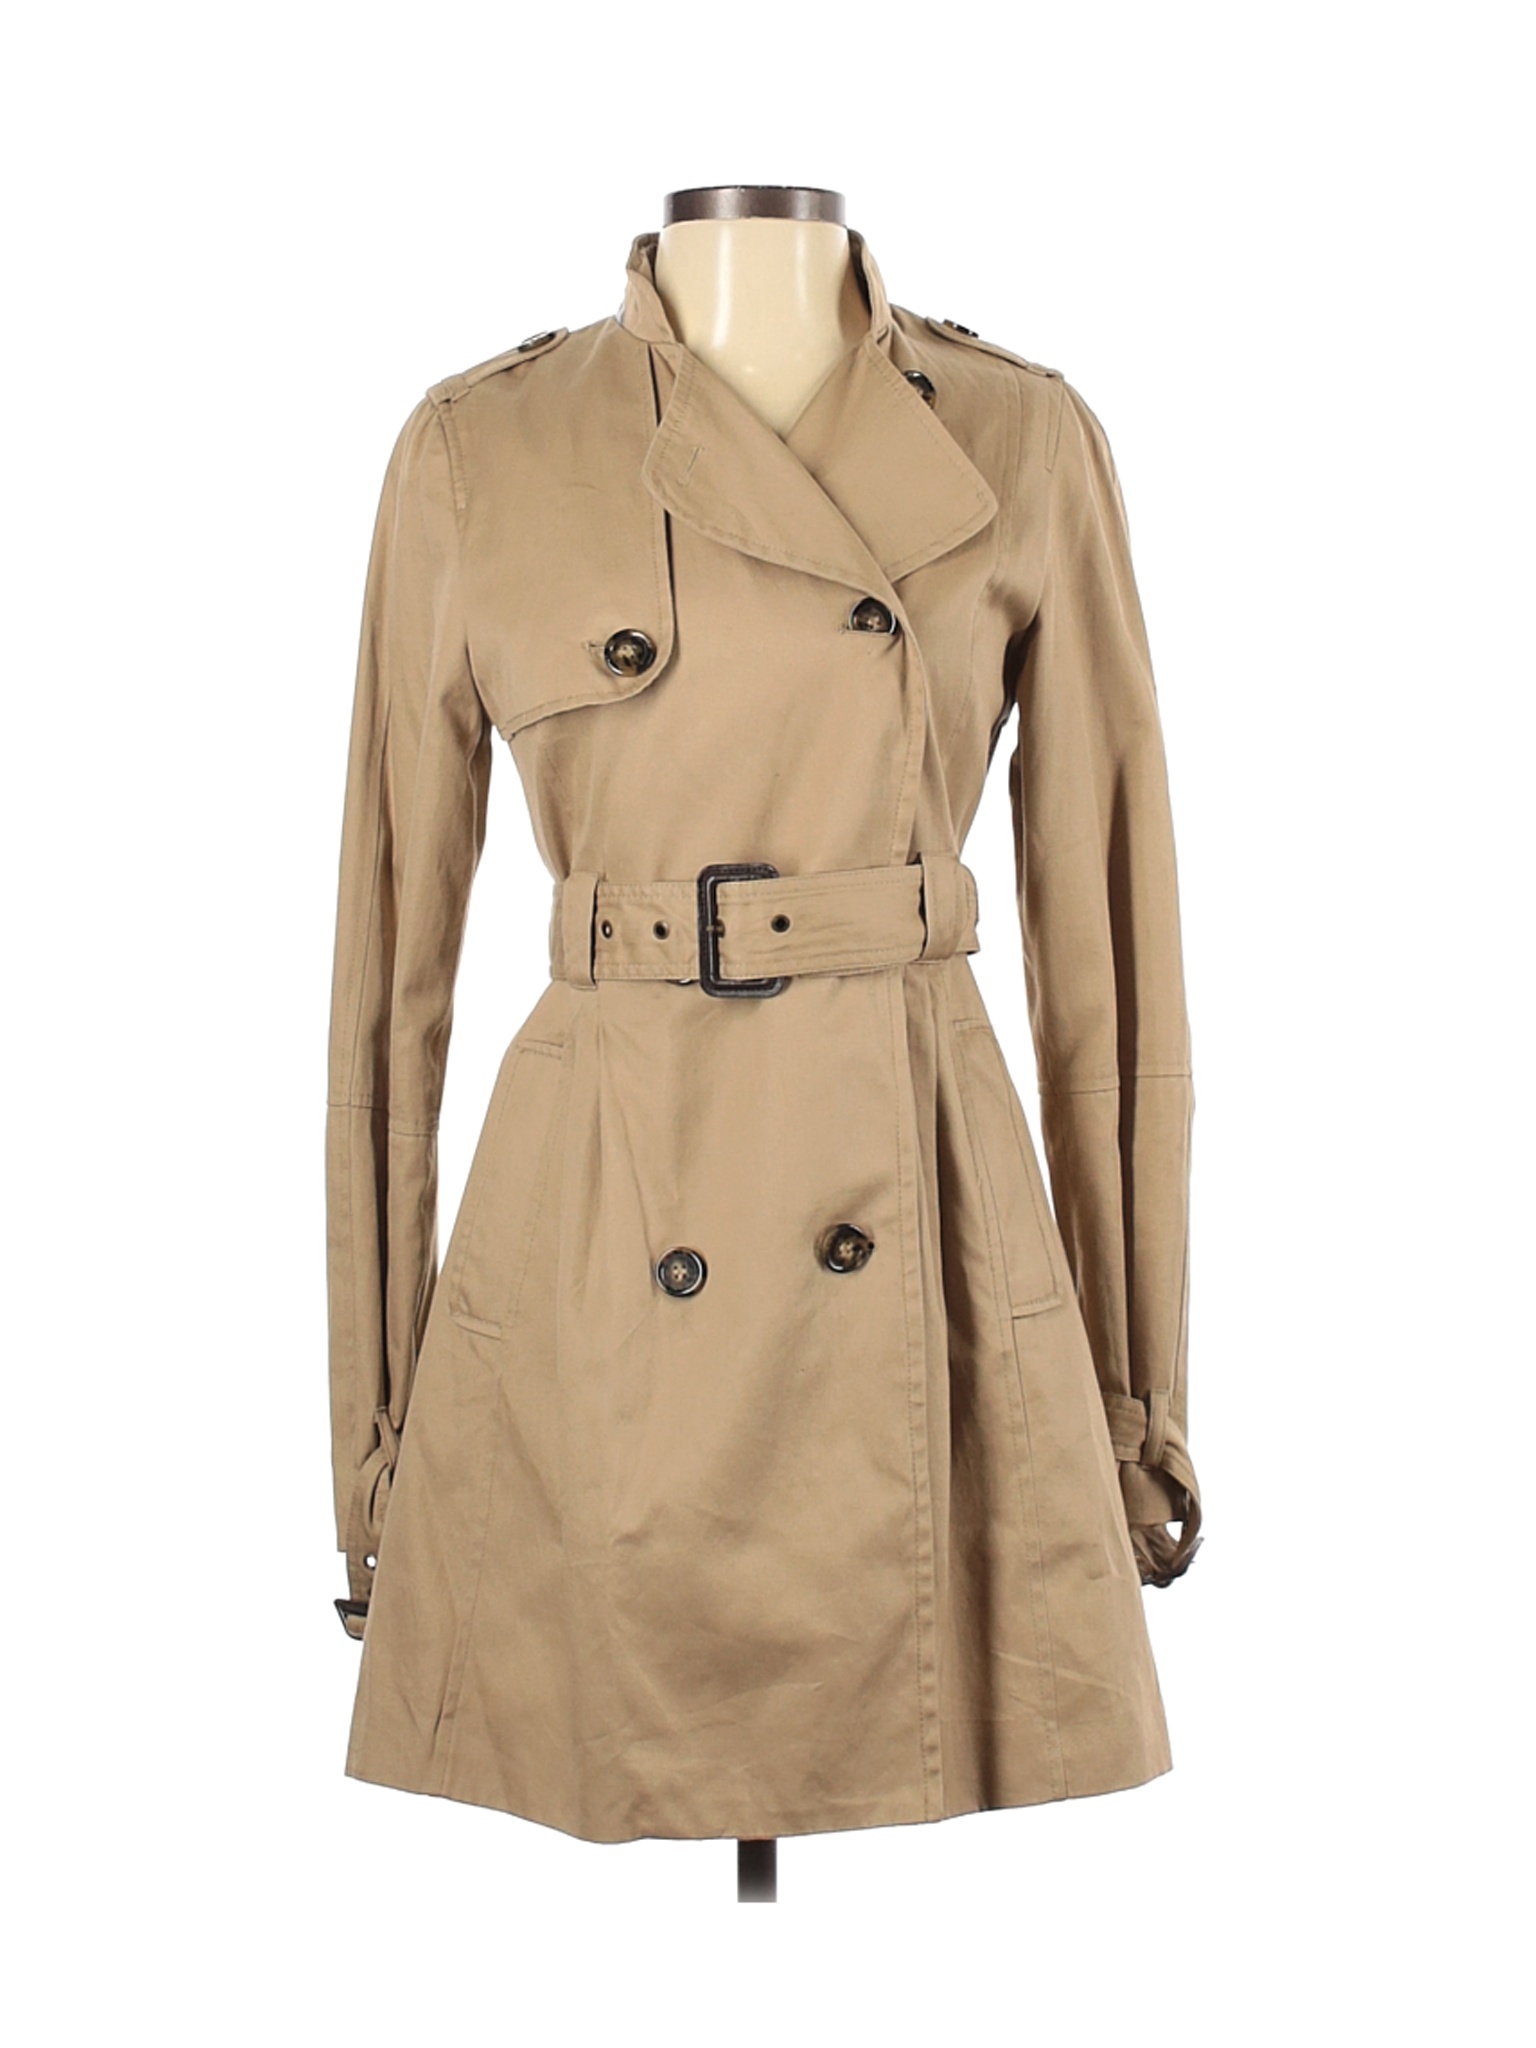 H&M Women Brown Trenchcoat 4 | eBay